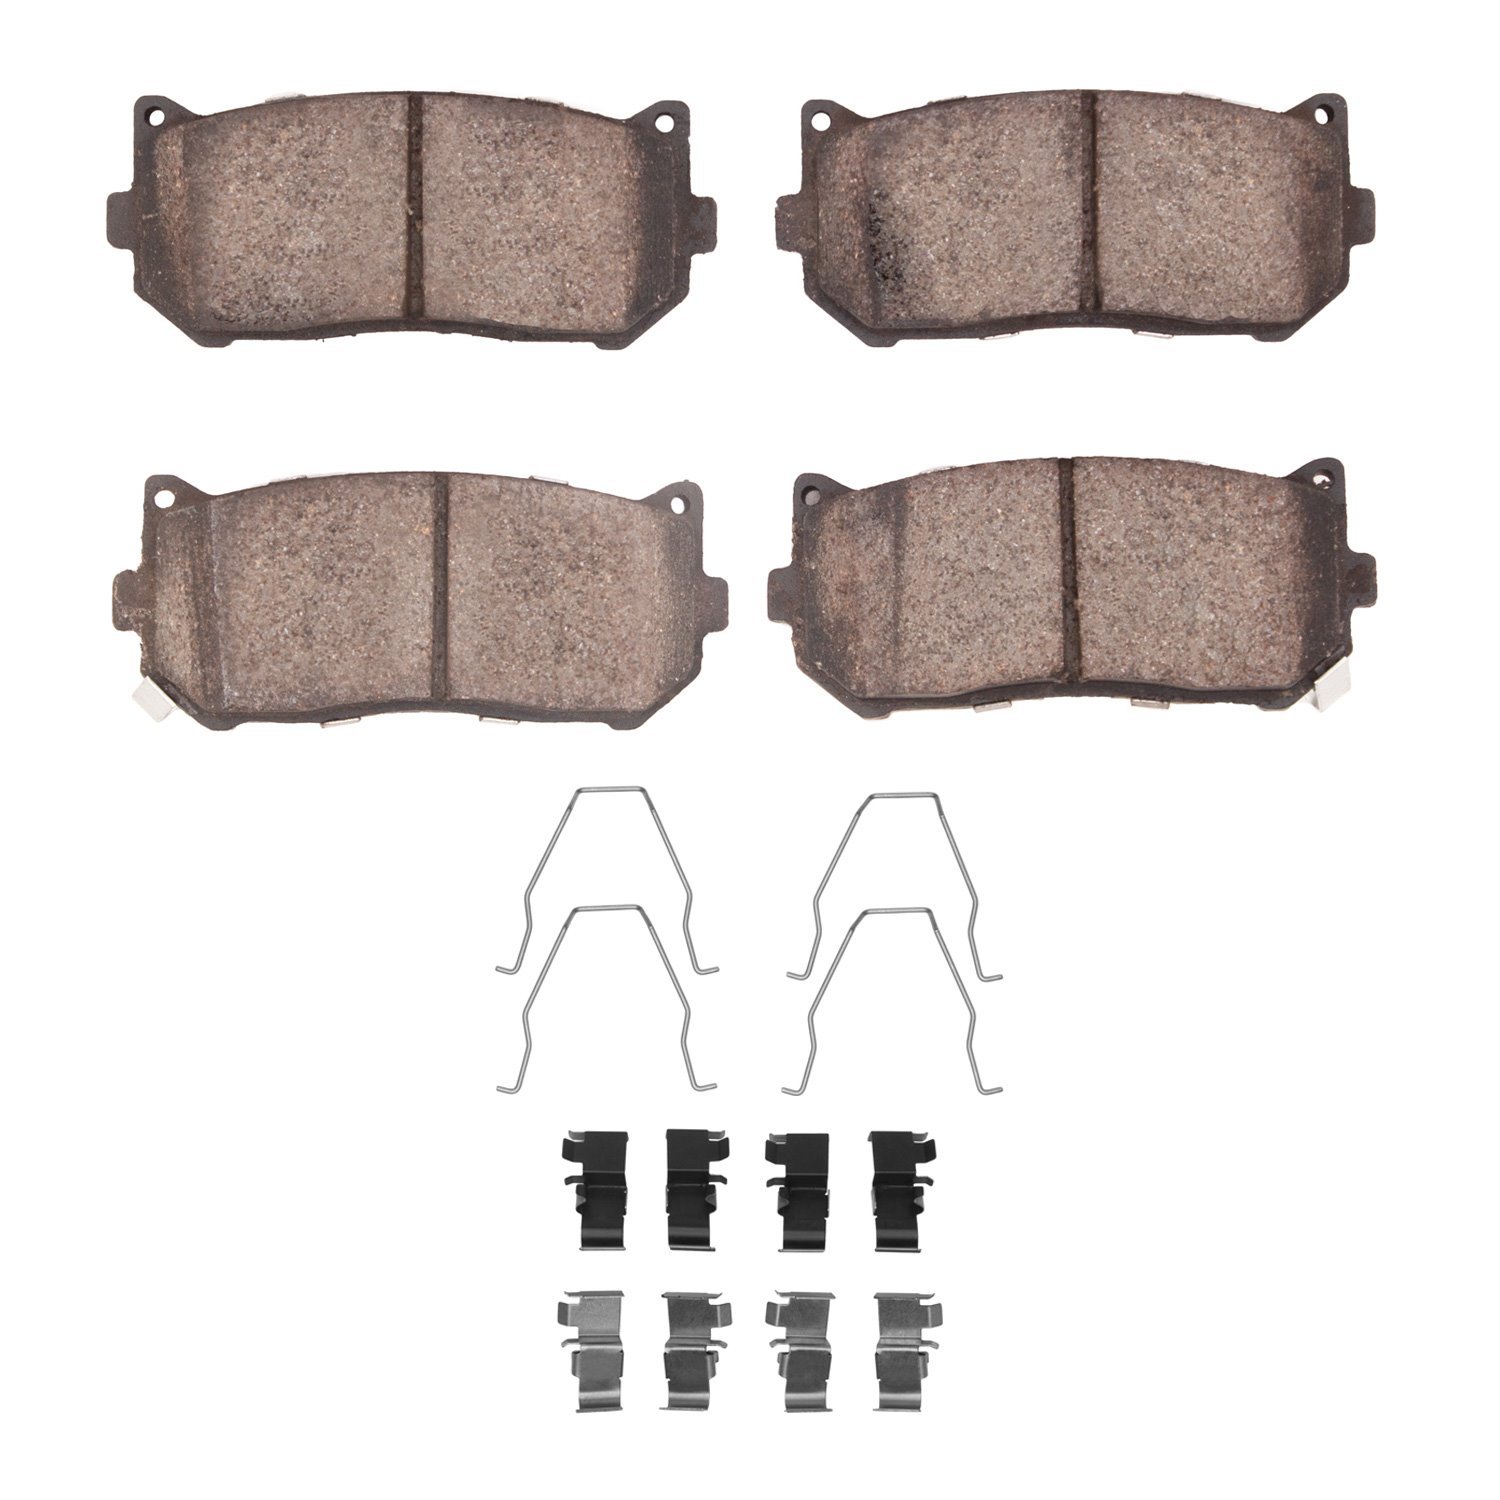 1310-0775-01 3000-Series Ceramic Brake Pads & Hardware Kit, 1998-2003 Kia/Hyundai/Genesis, Position: Rear